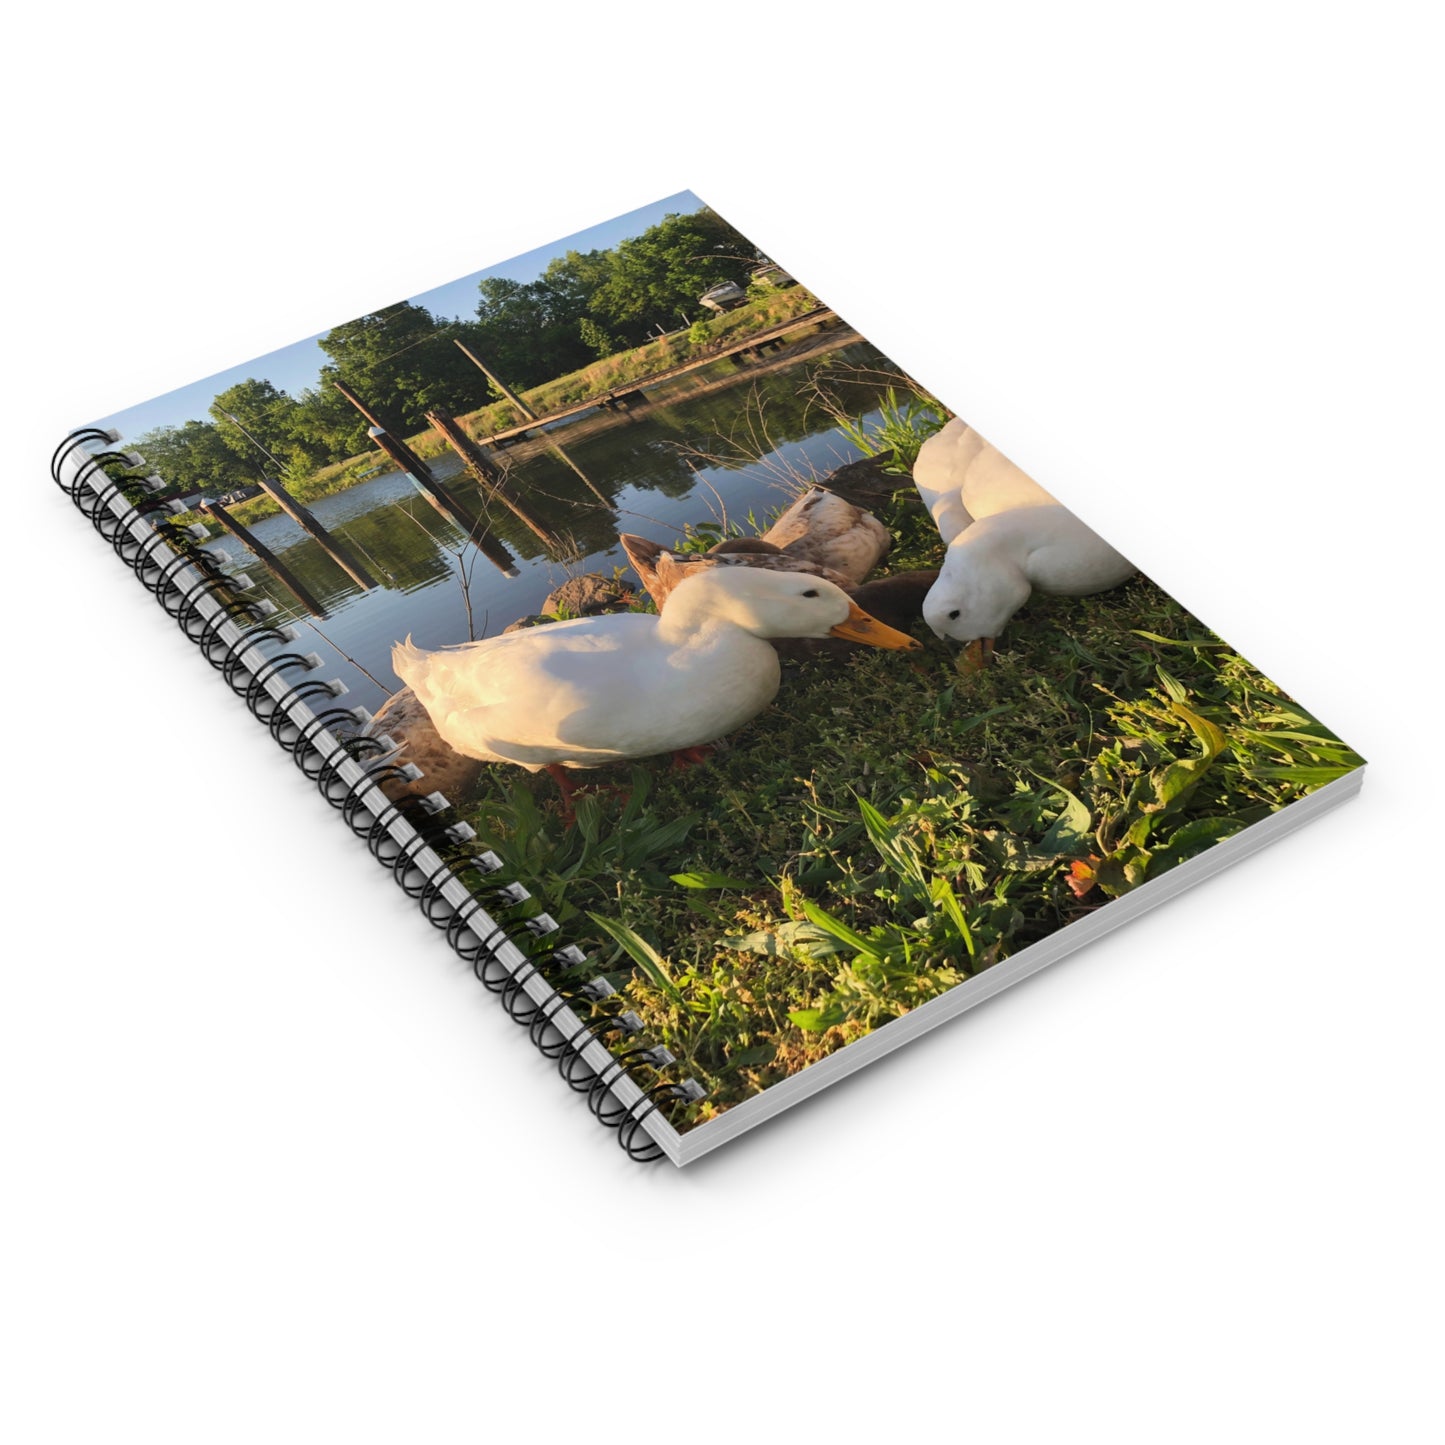 'Feeding the Ducks' Spiral Notebook - Ruled Line